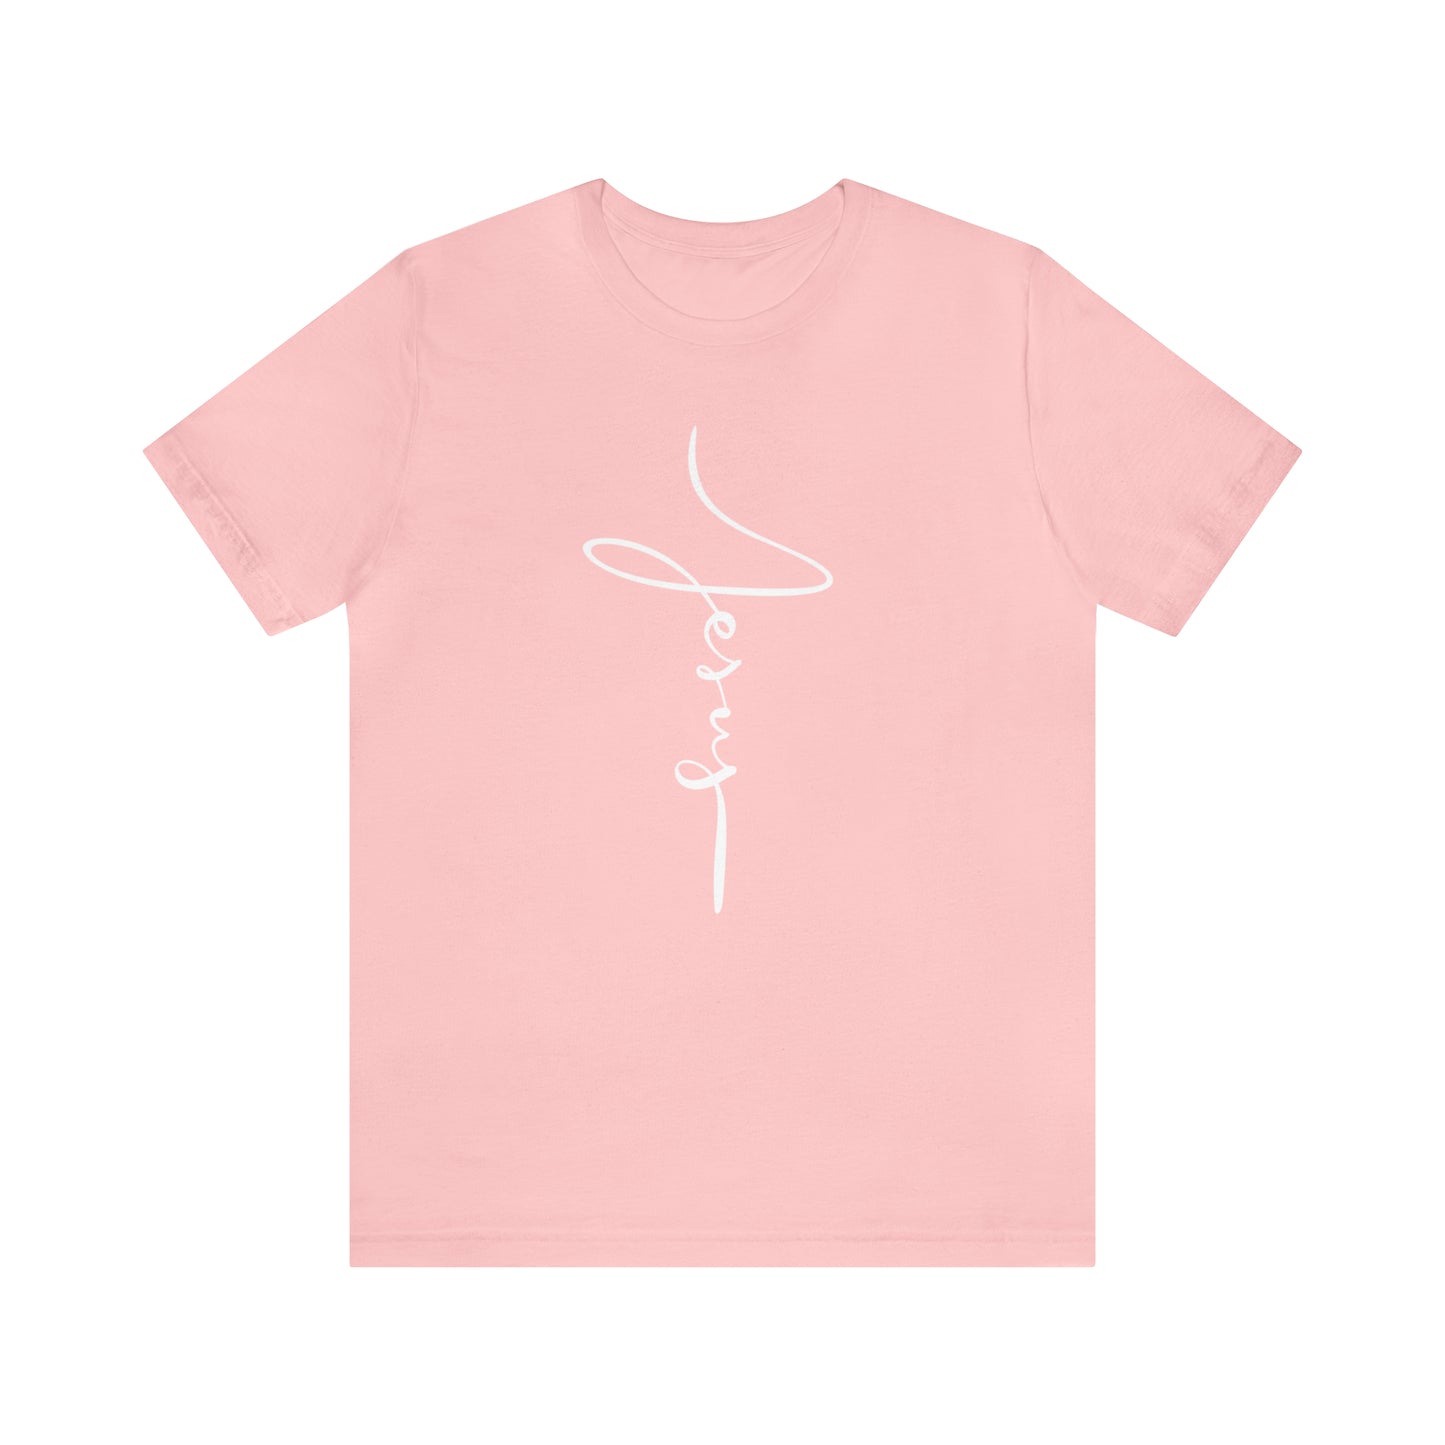 Jesus Cross Christian T-Shirt - Cursive White Font Bright Color Tees - Pink mockup